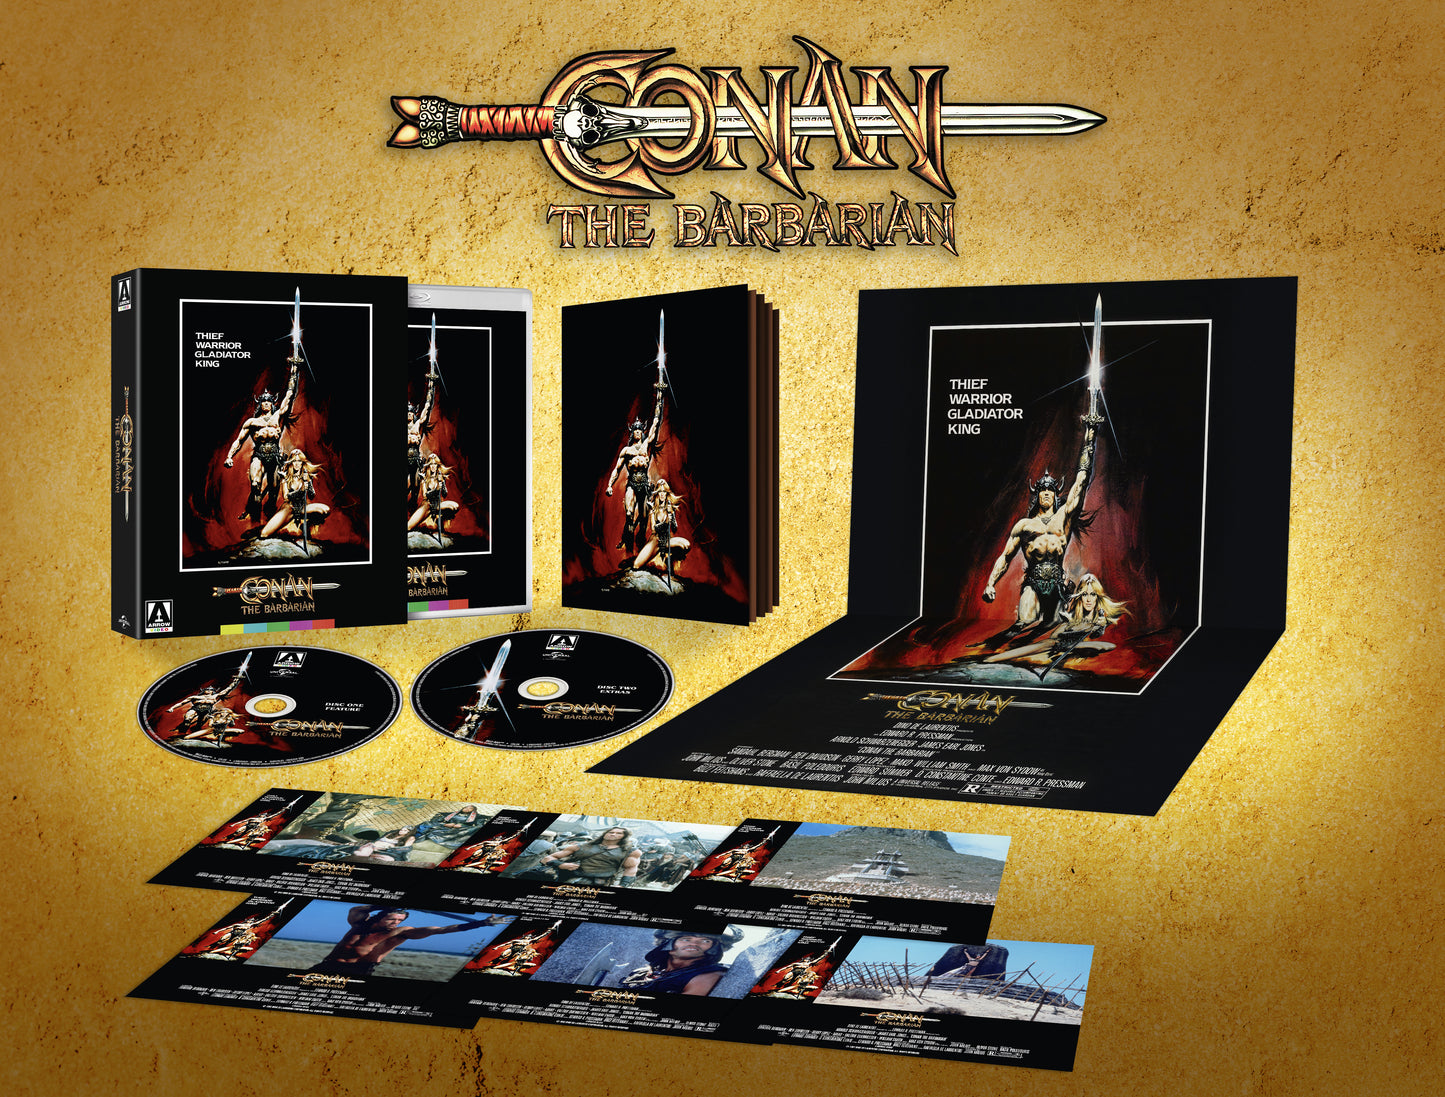 Conan The Barbarian Limited Edition Arrow Video Blu-Ray [PRE-ORDER] [SLIPCOVER]